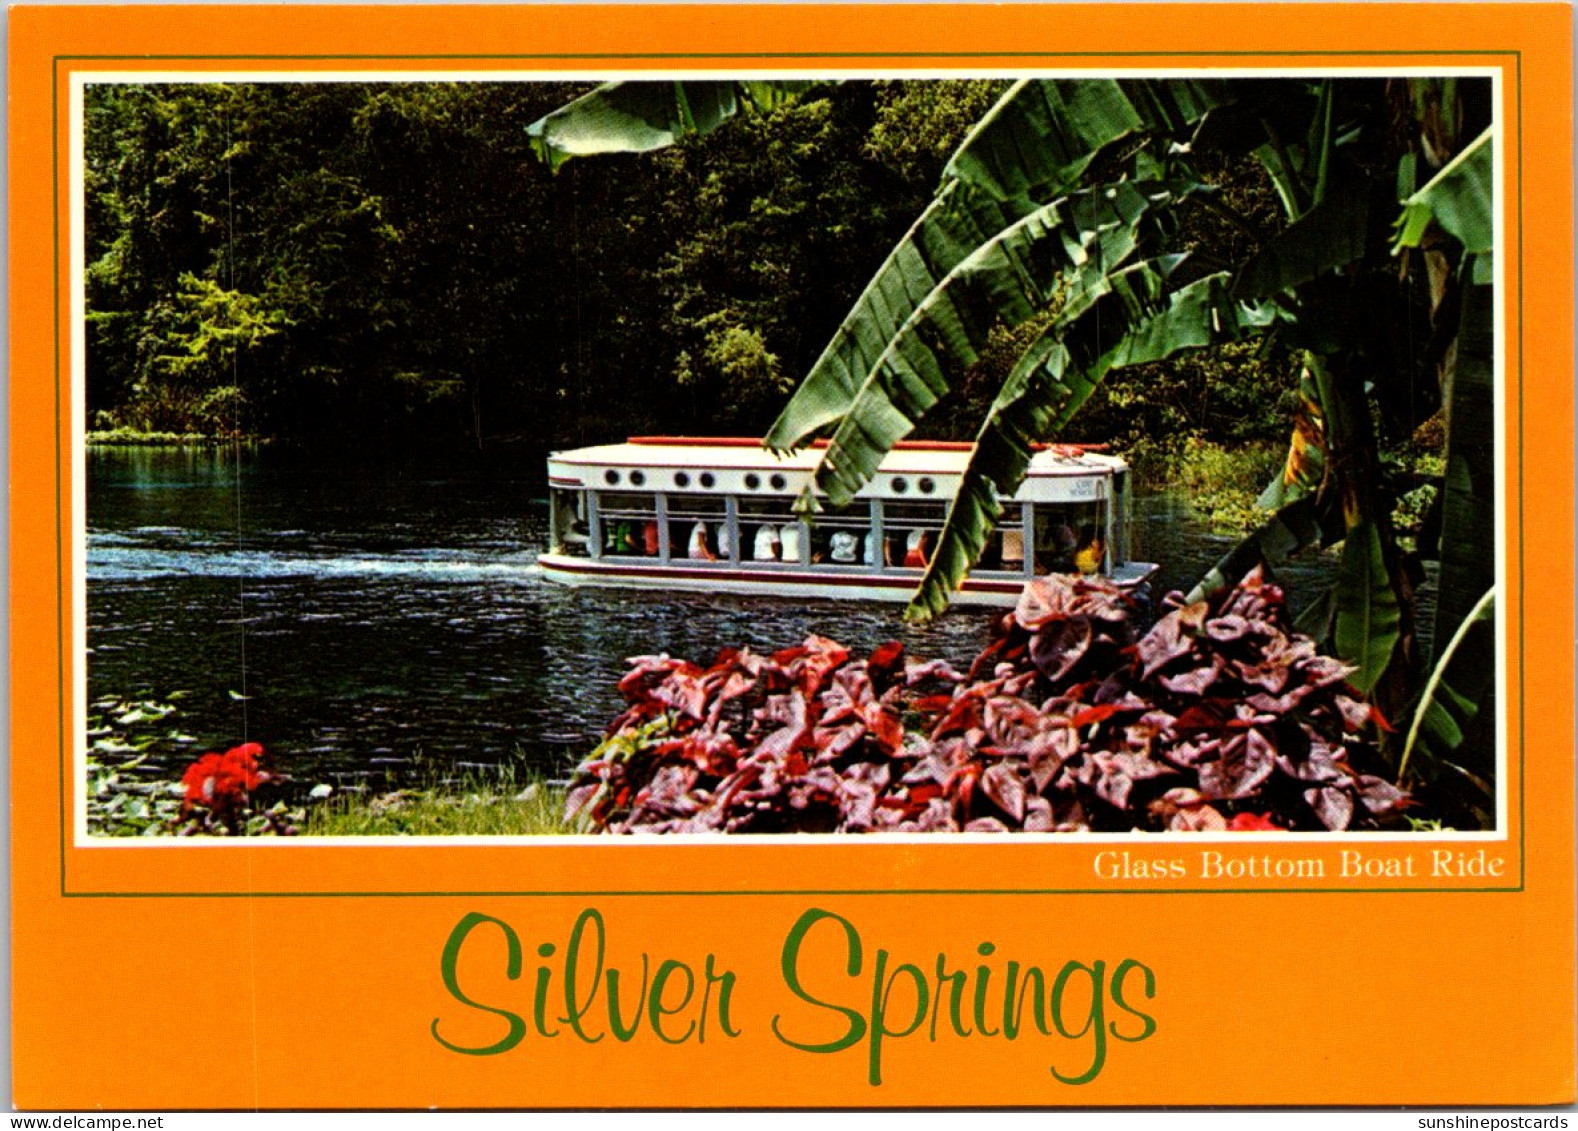 FLorida Silver Springs Glass Bottom Boat Ride - Silver Springs